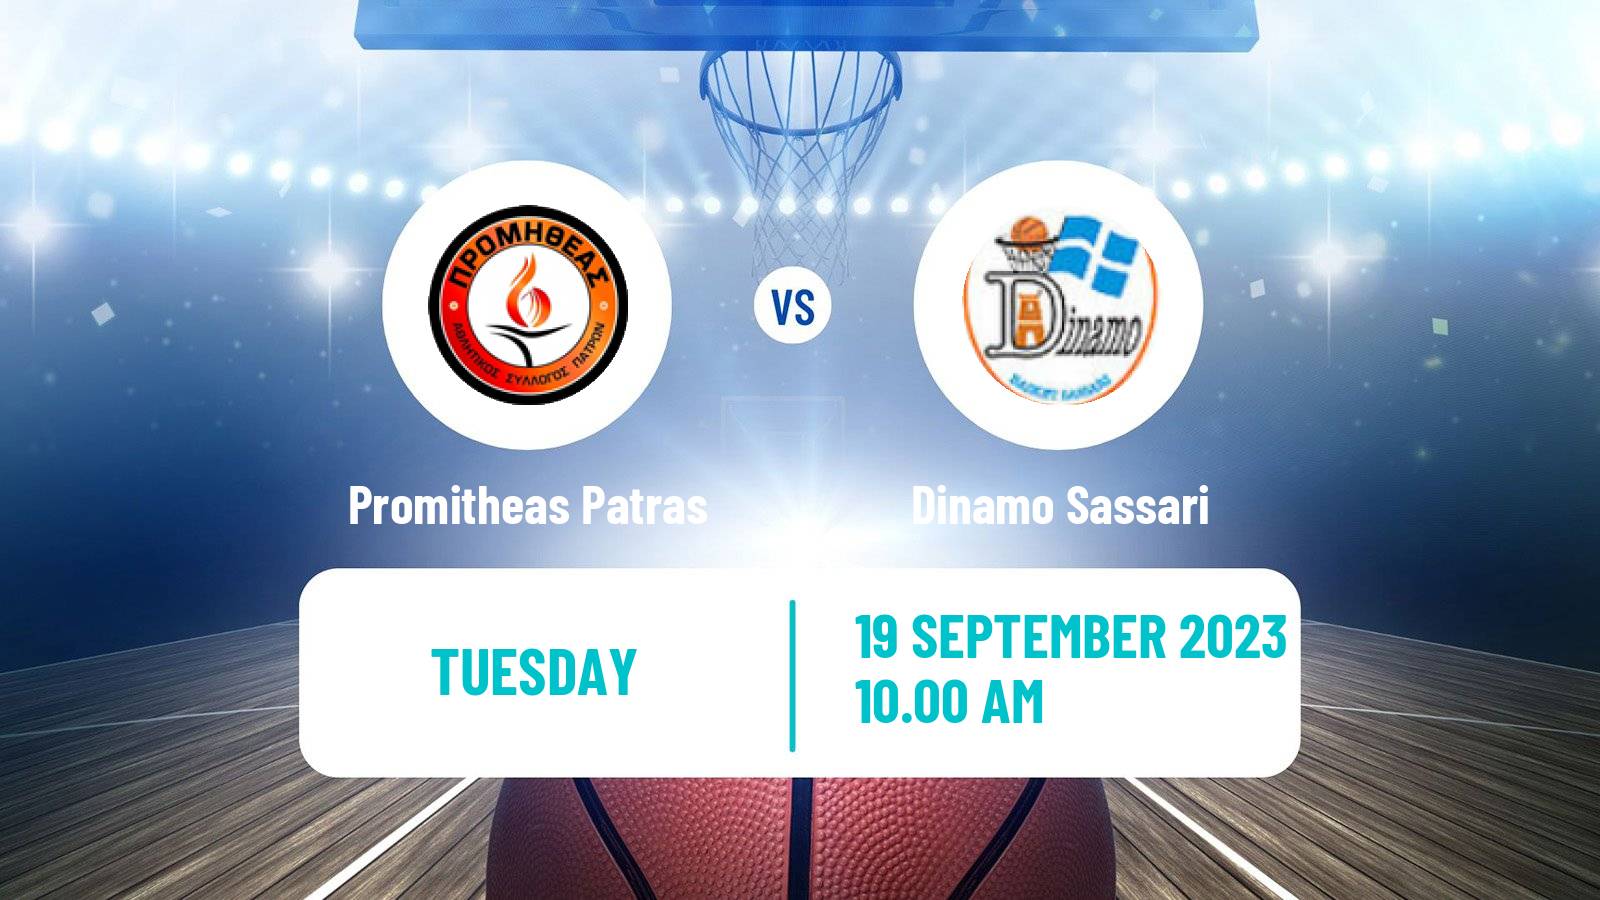 Basketball Club Friendly Basketball Promitheas Patras - Dinamo Sassari